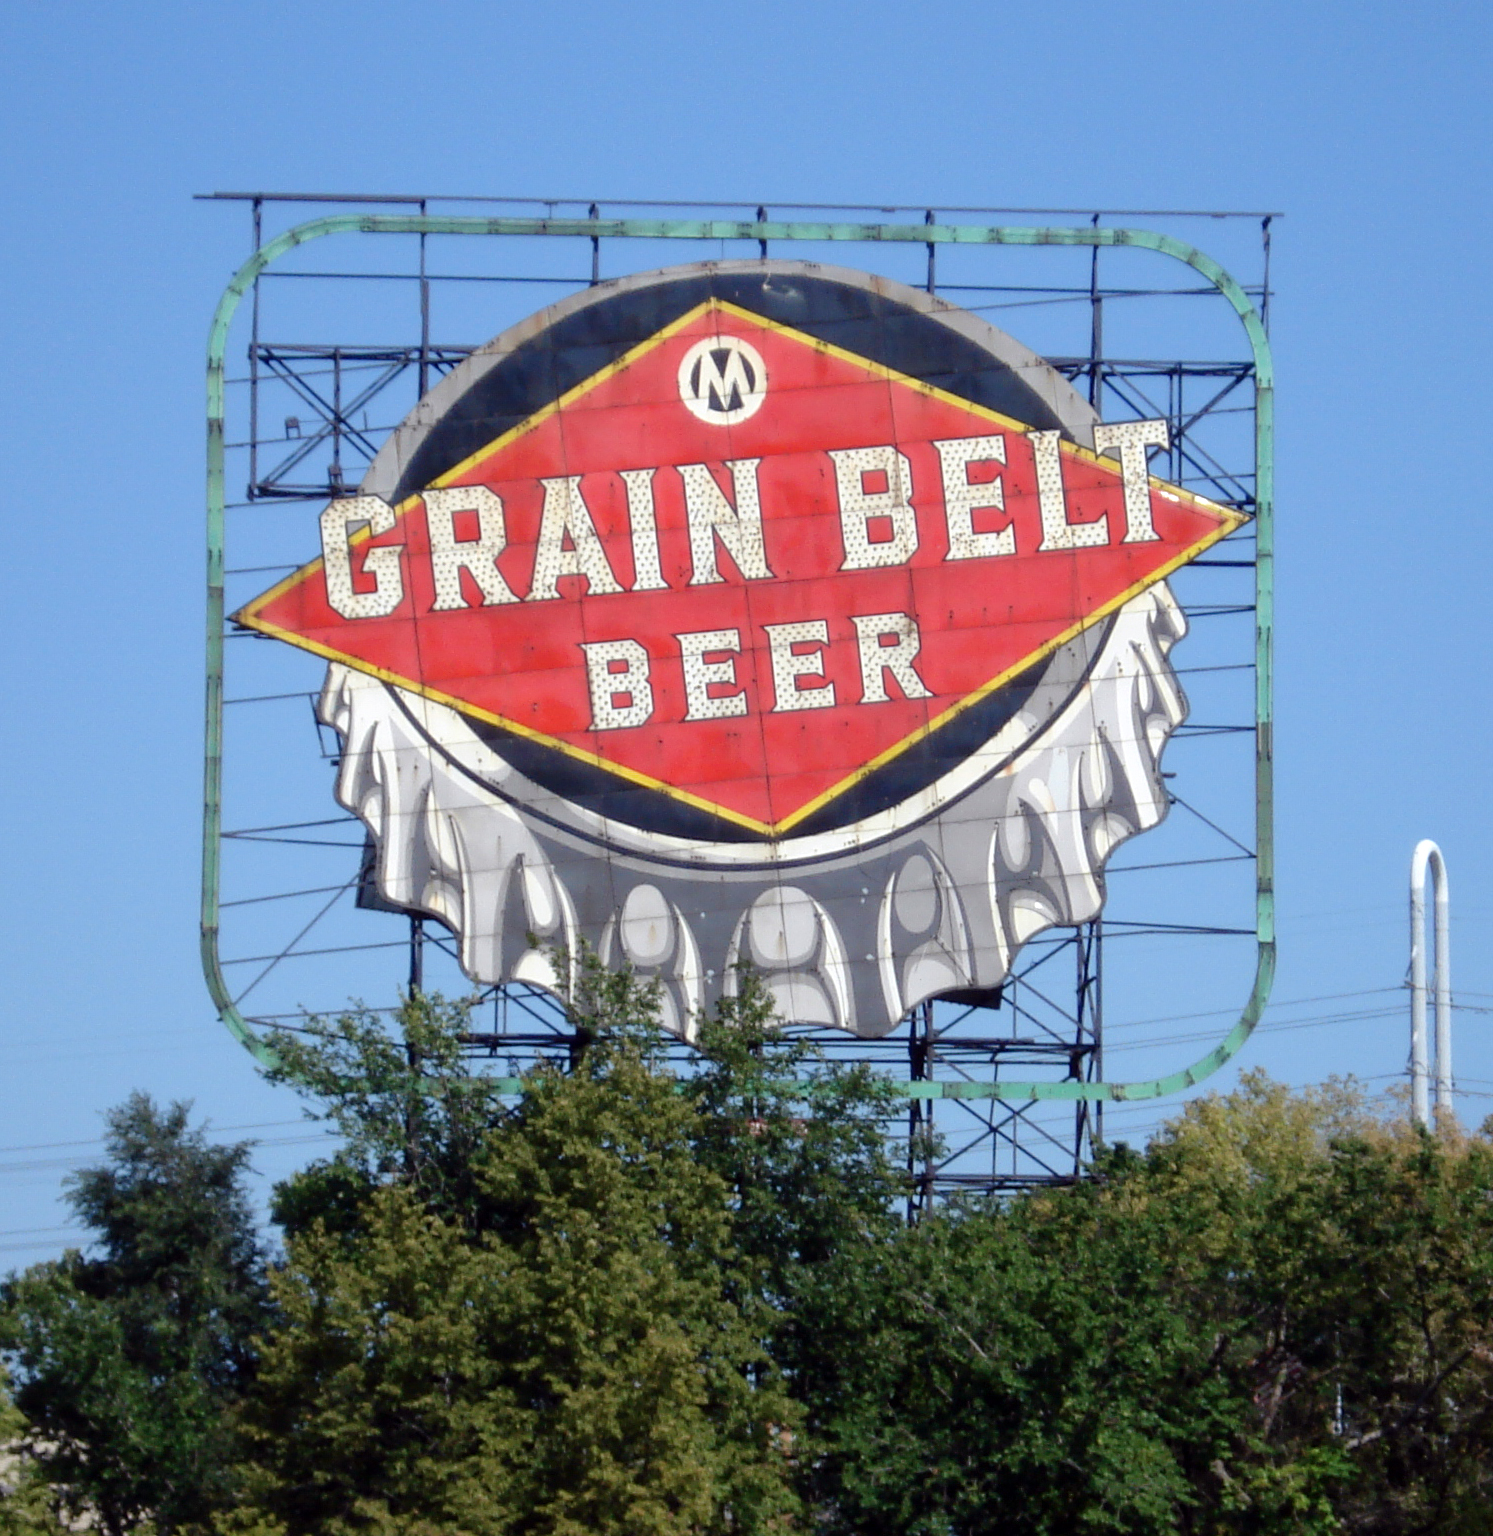 Grain Belt Beer - Minneapolis, Minnesota U.S.A. - September 16, 2007